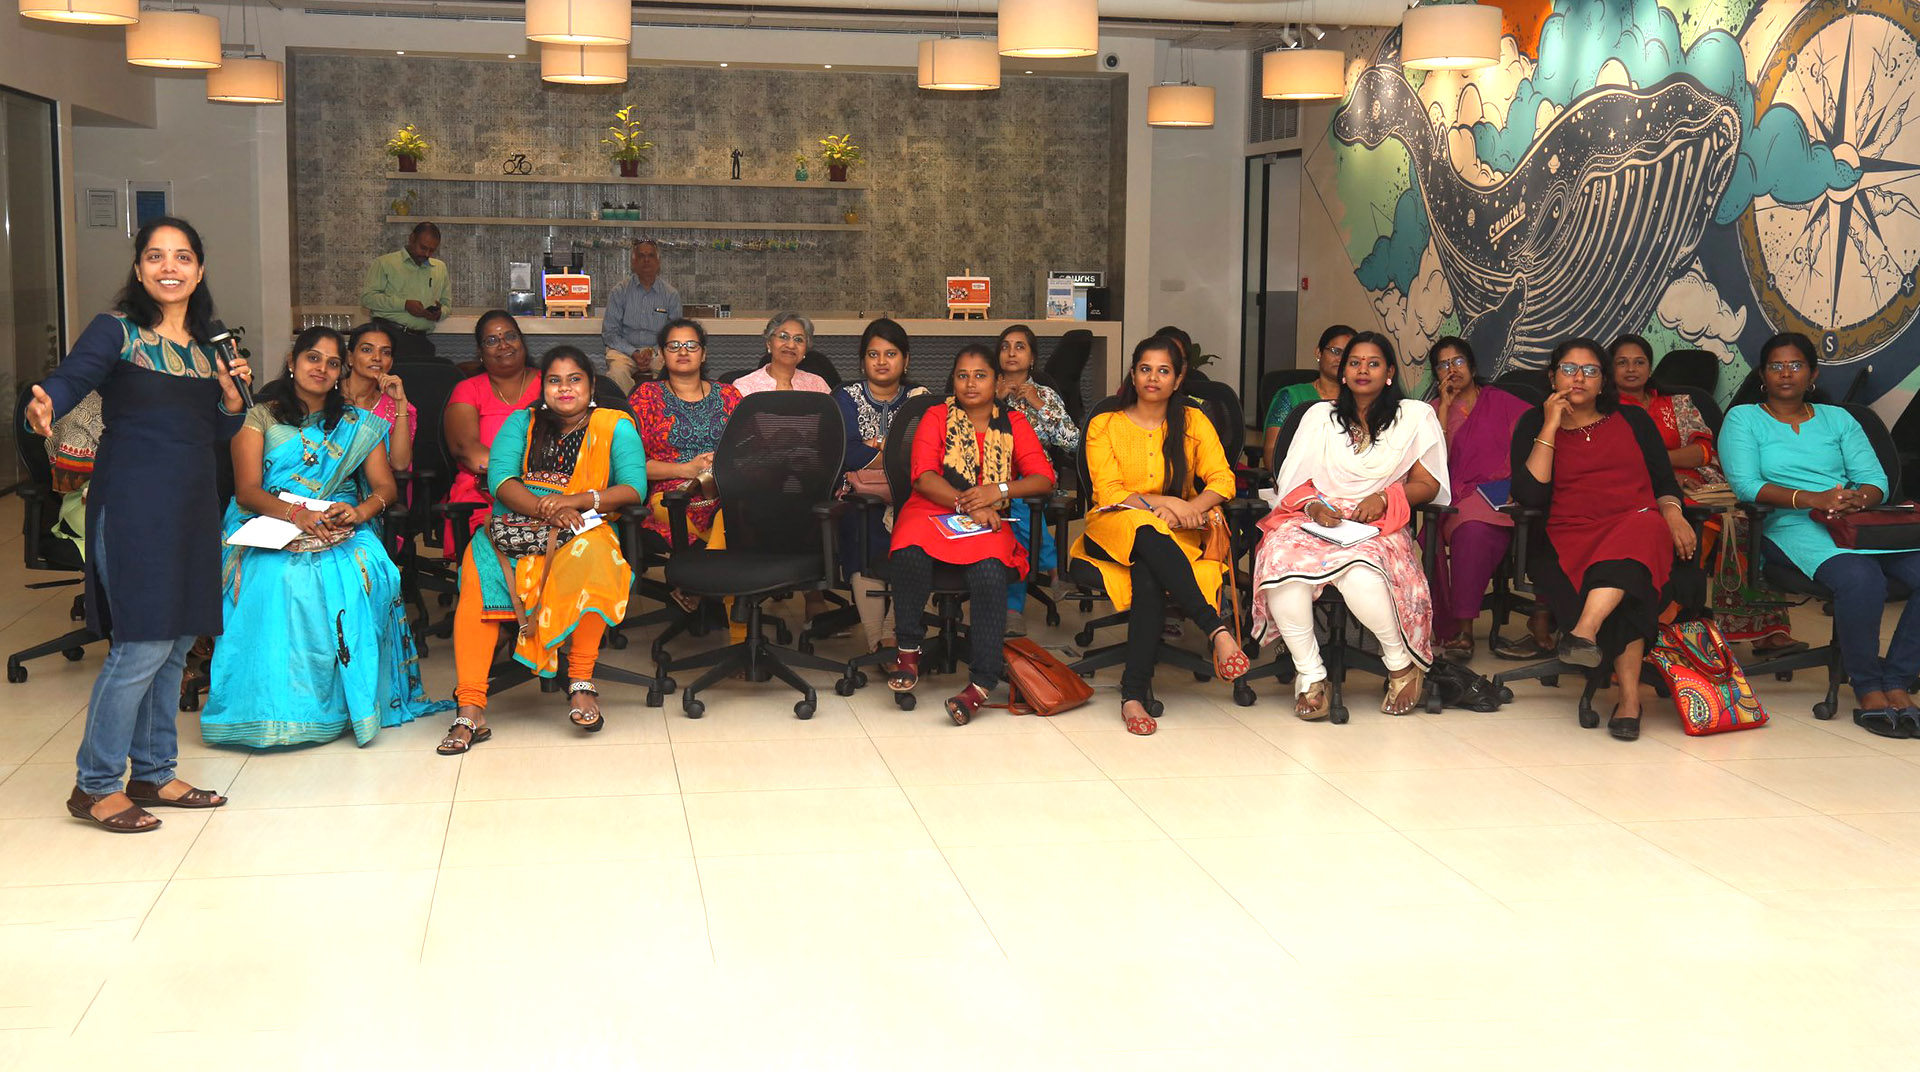 Successful Women Entrepreneurs in India